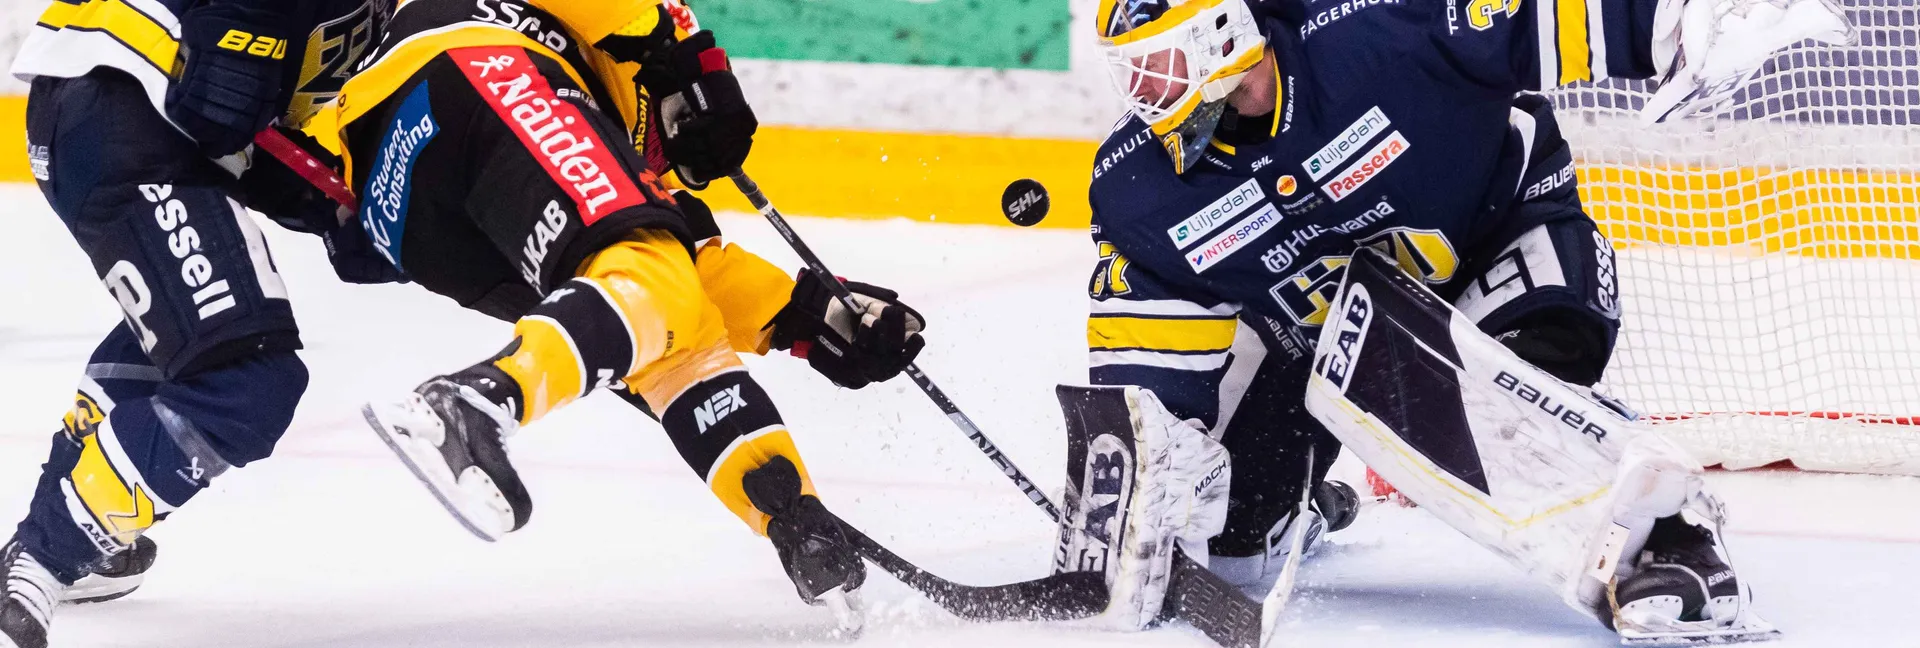 Ishockeymatch mellan HV71 och Luleå i SHL